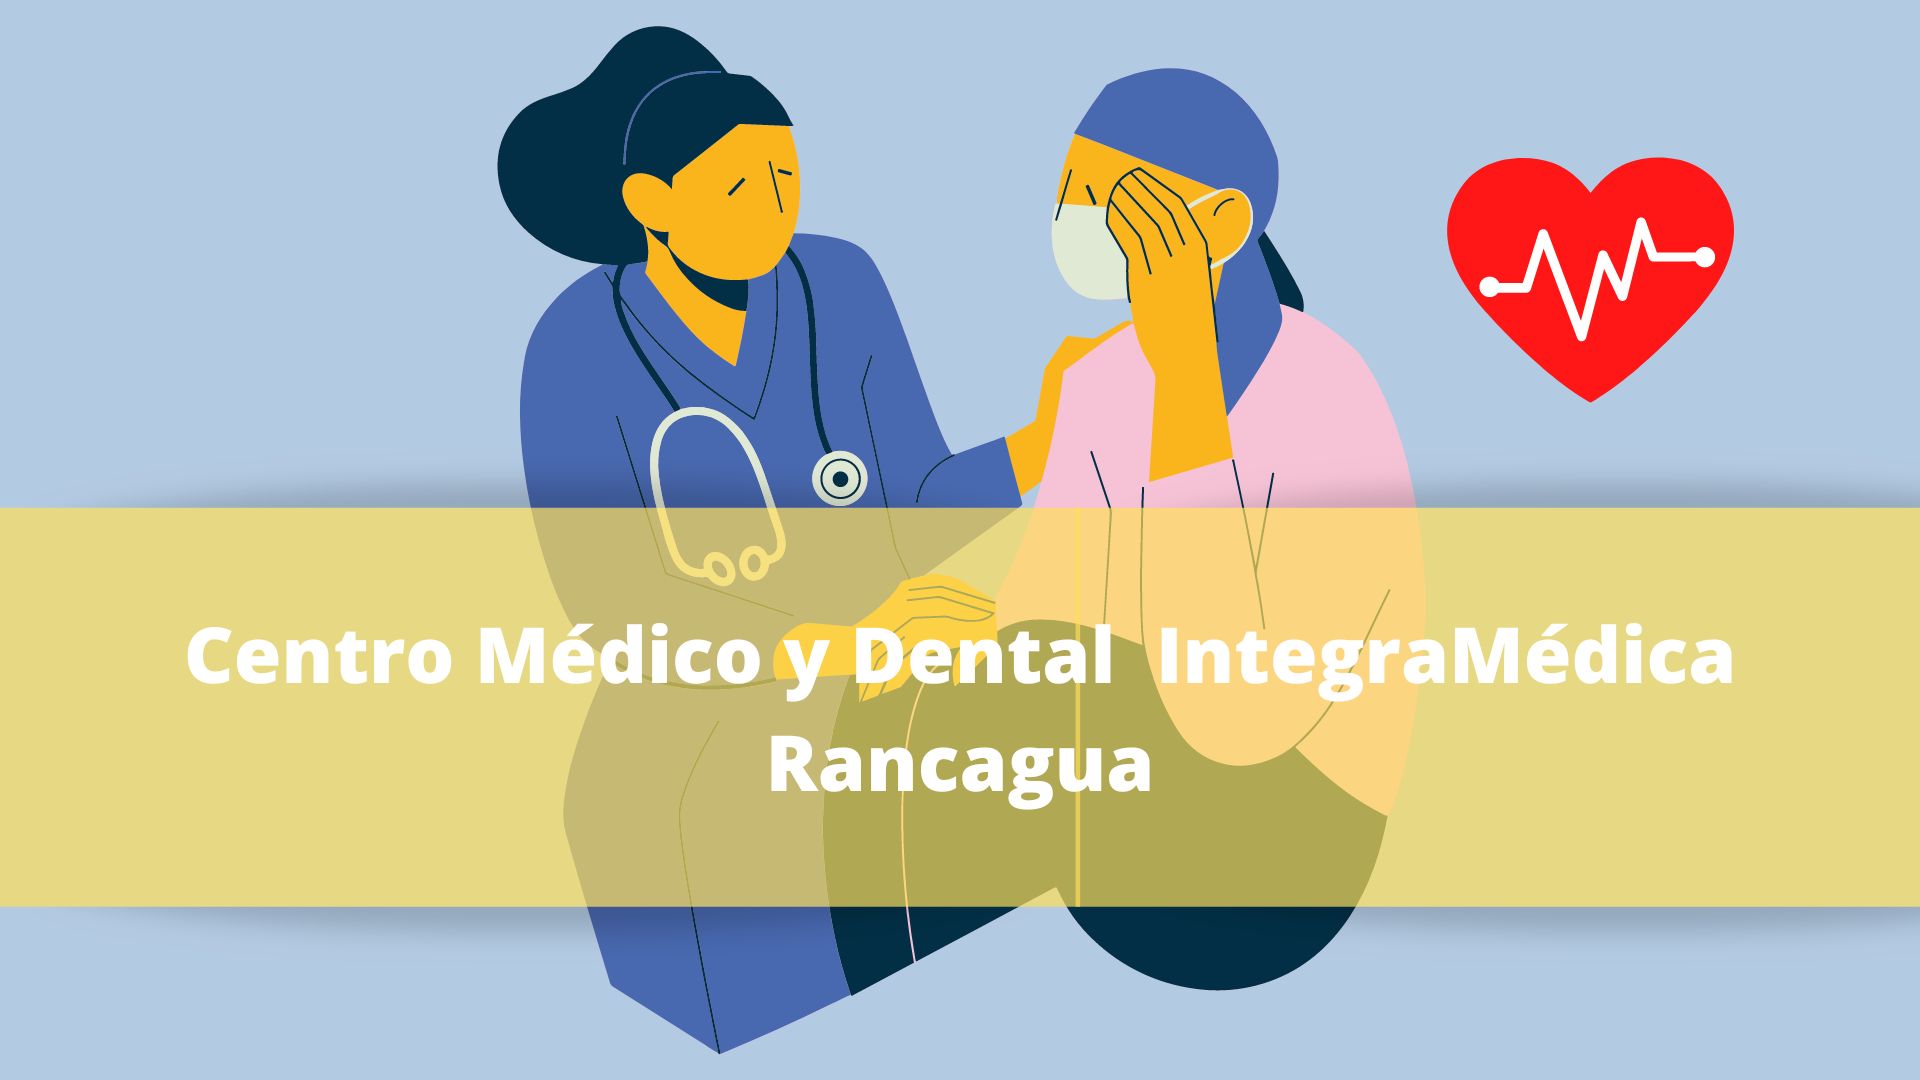 Centro Médico y Dental IntegraMédica Rancagua